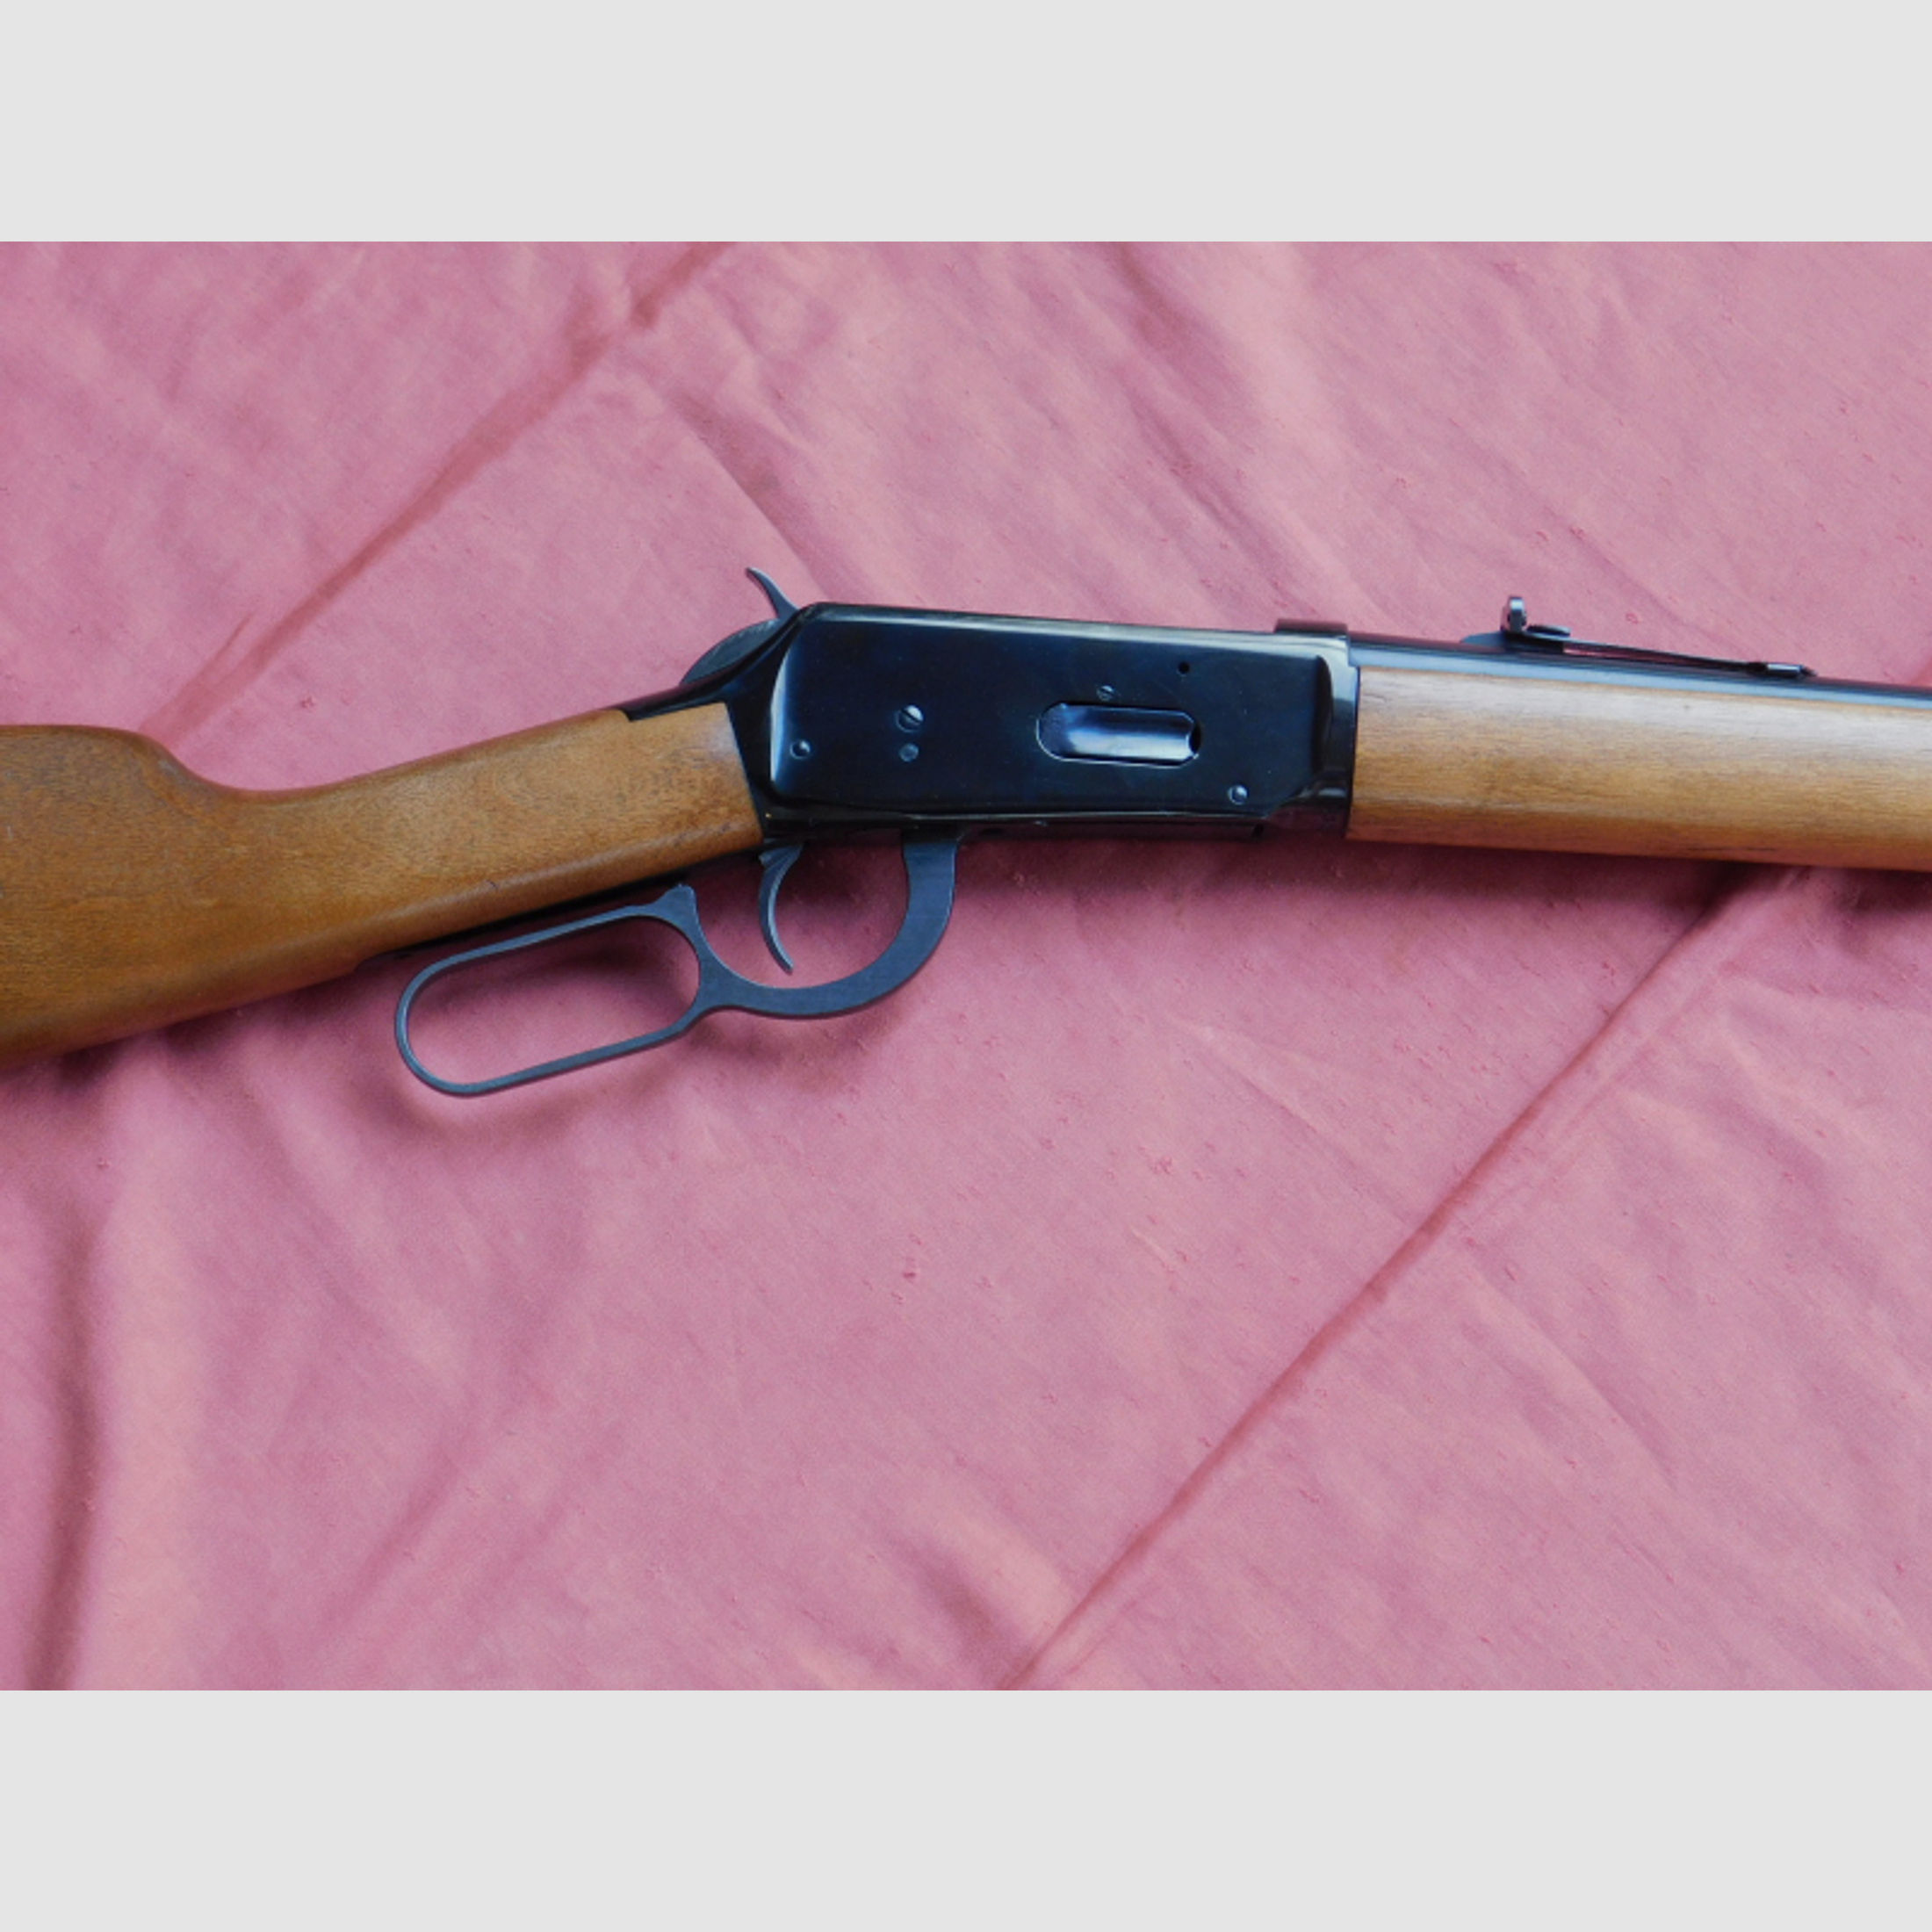 Winchester Modell 94 UHR Kal.44 Magnum